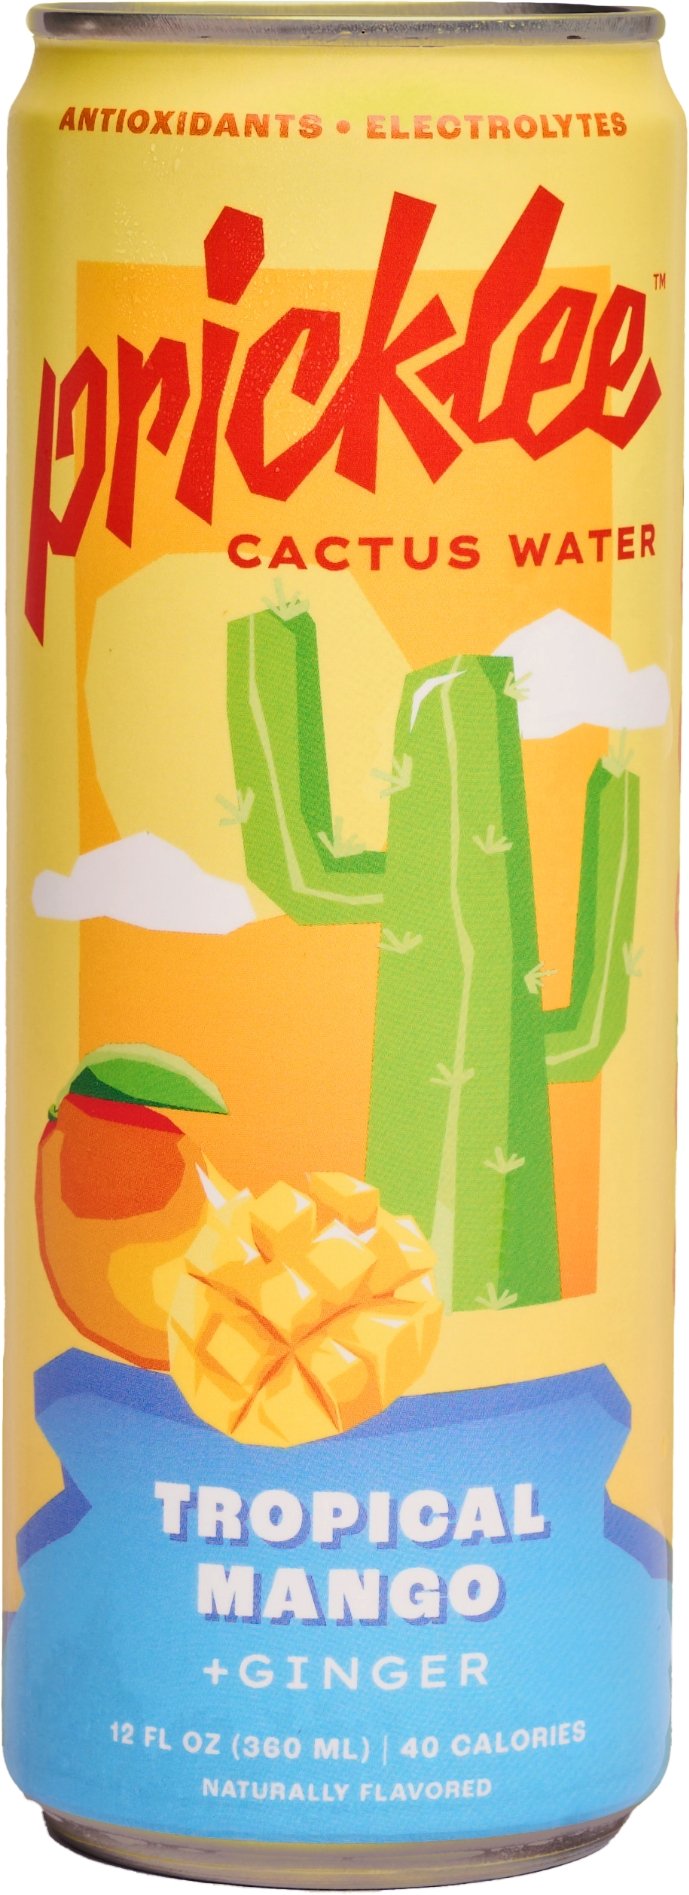 🌵 Pricklee Cactus Water 🌵 - Mango Ginger by 🌵 Pricklee Cactus Water 🌵 - Farm2Me - carro-6363154 - B07TY22X1J -